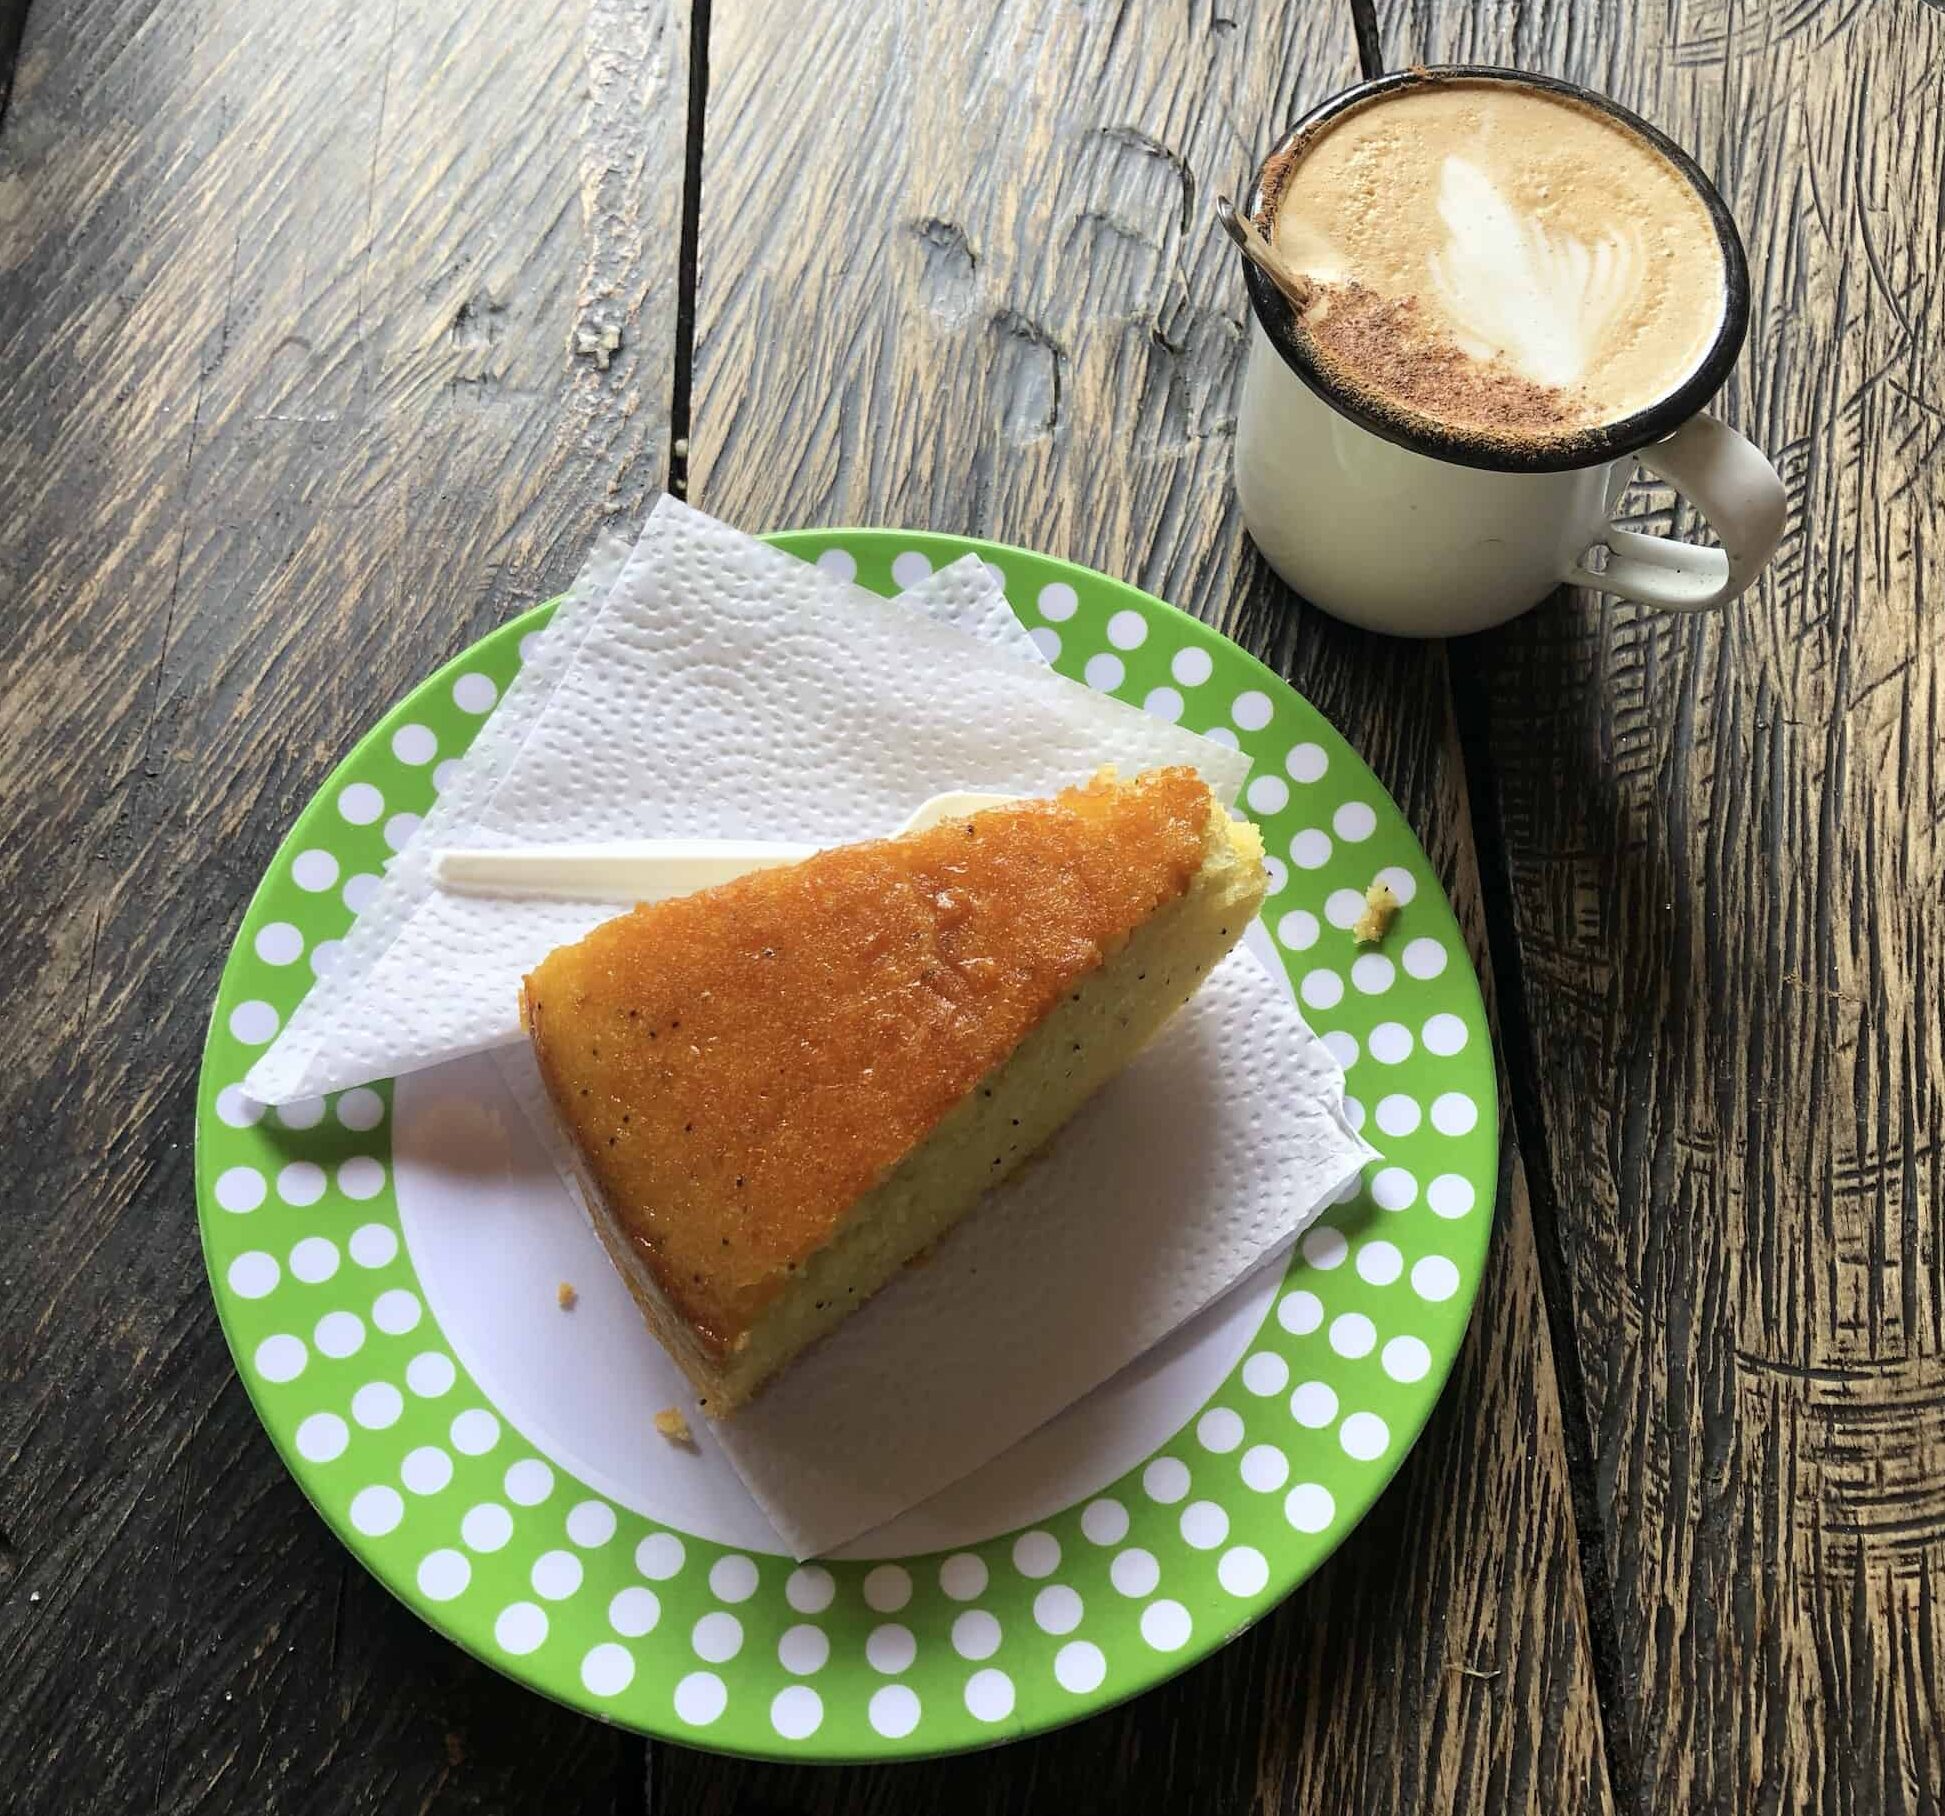 Orange poppyseed cake and latte at Café del Guadual